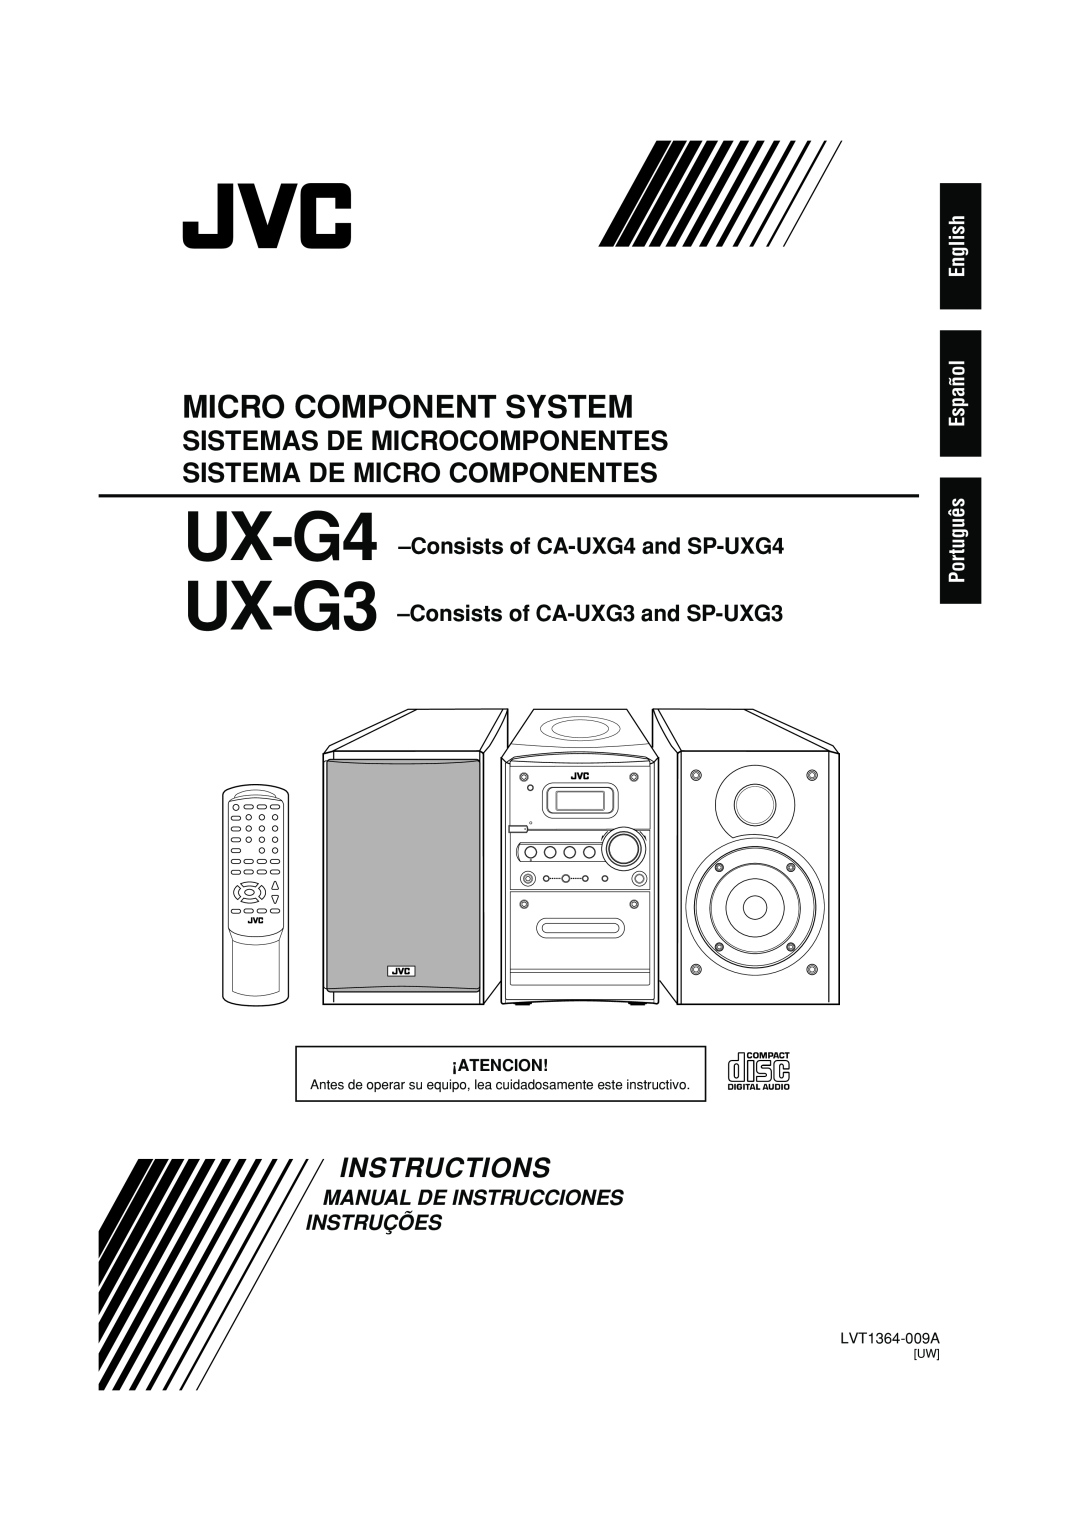 JVC LVT1364-006B Micro Component System, Instructions, UX-G4 –Consistsof CA-UXG4and SP-UXG4, English Español Português 